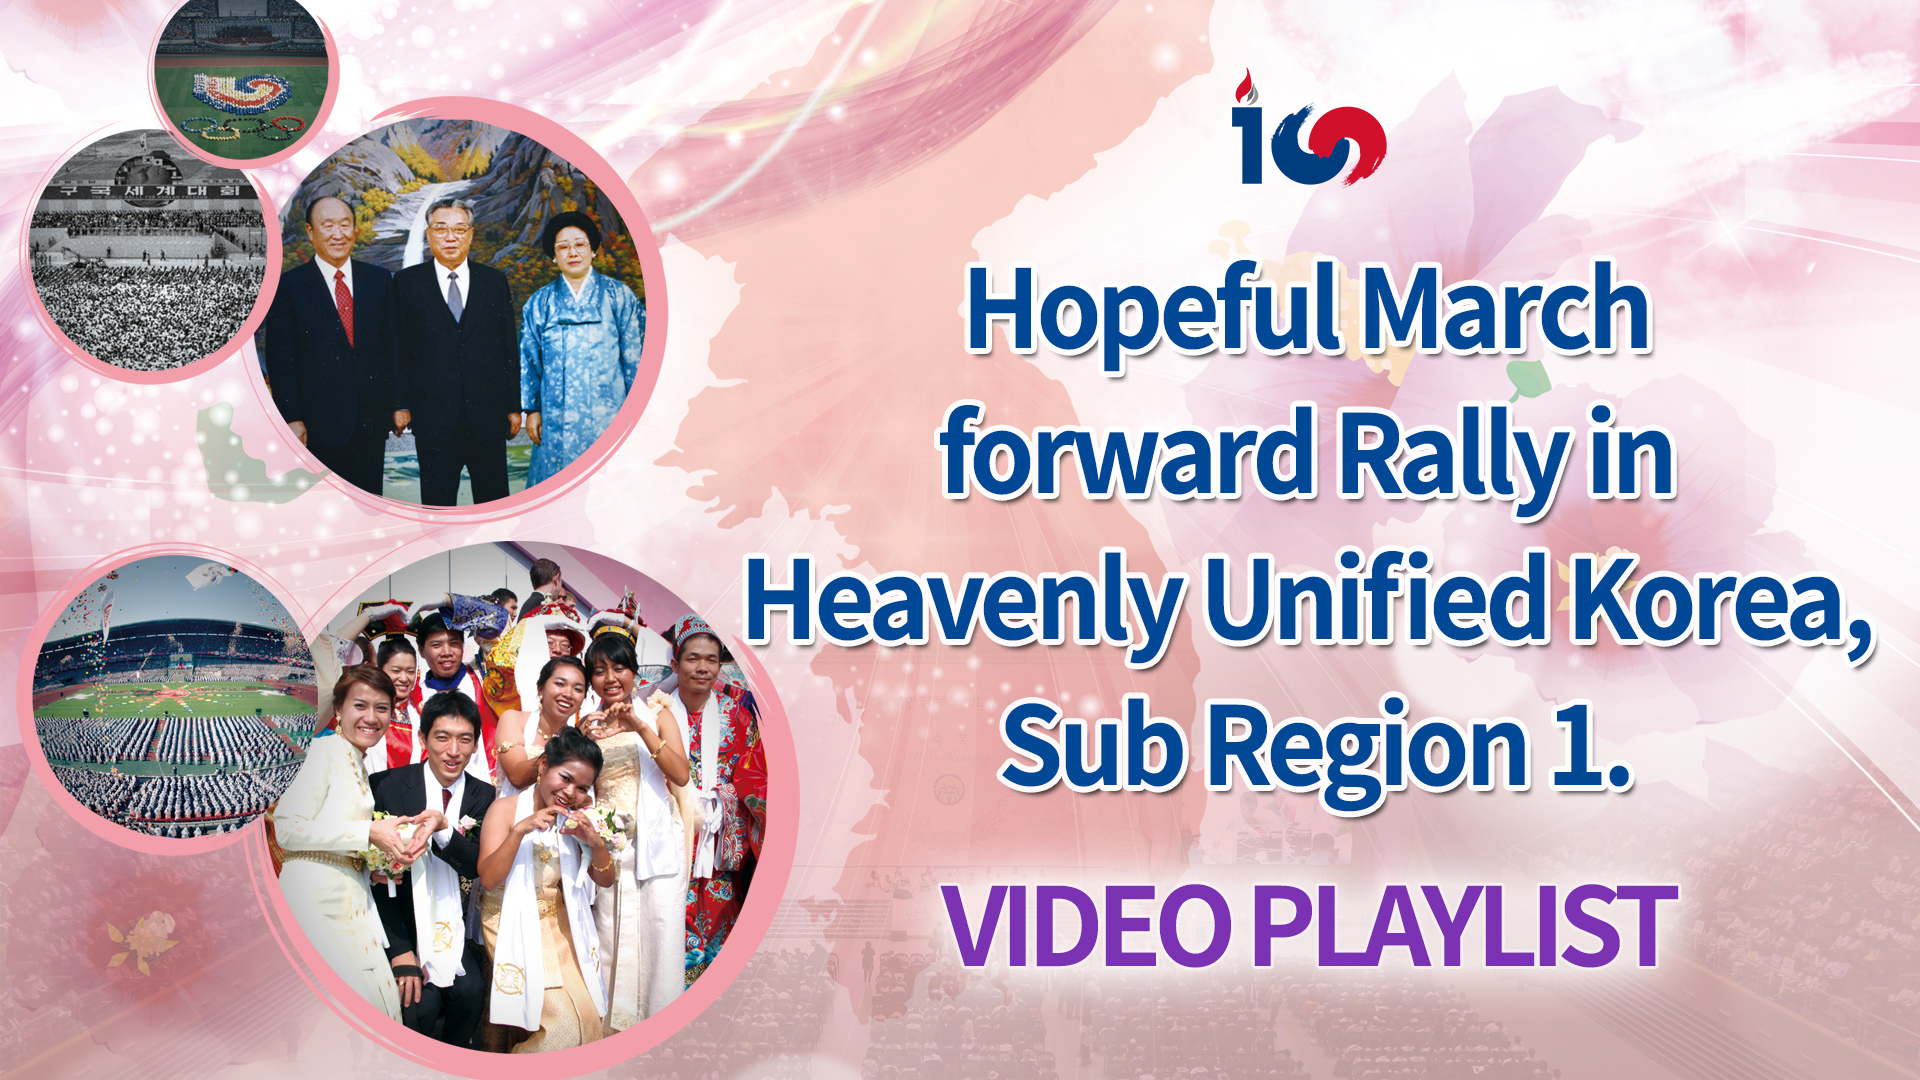 (Sub Region 1)Hopeful March forward Rally in Heavenly Unified Korea